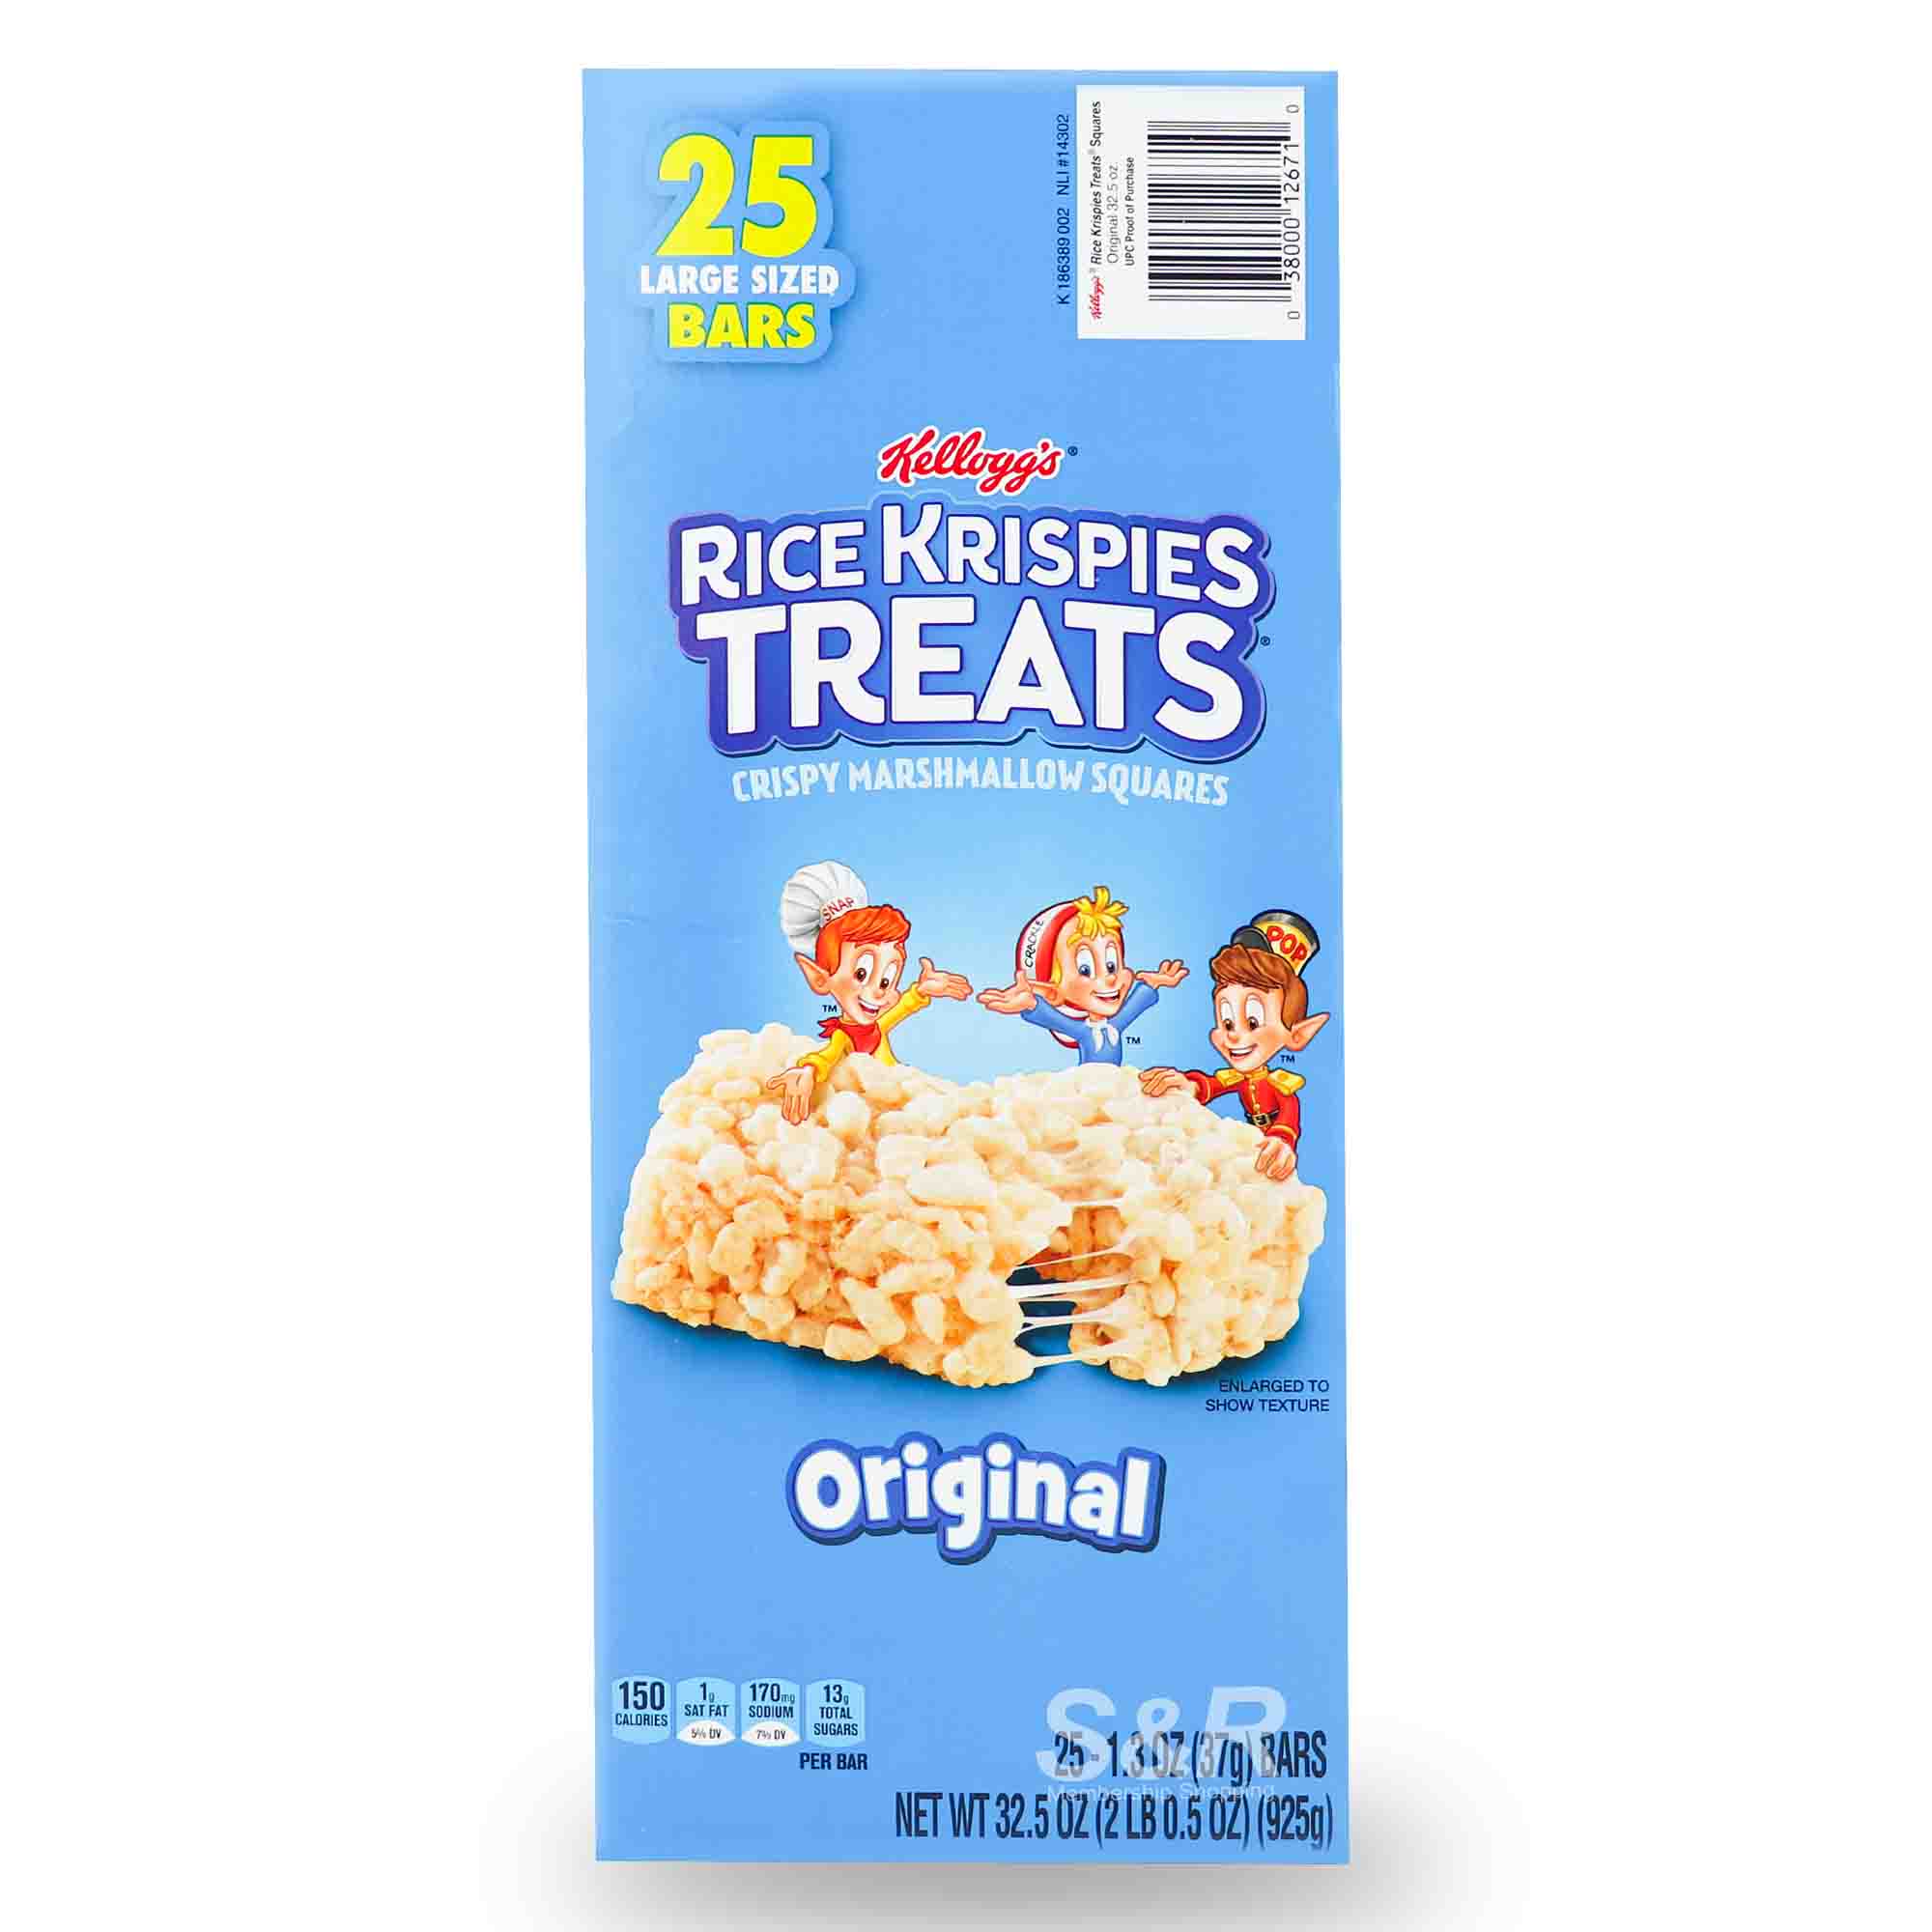 Kellogg's Rice Krispies Treats Original Crispy Marshmallow Squares 25 bars